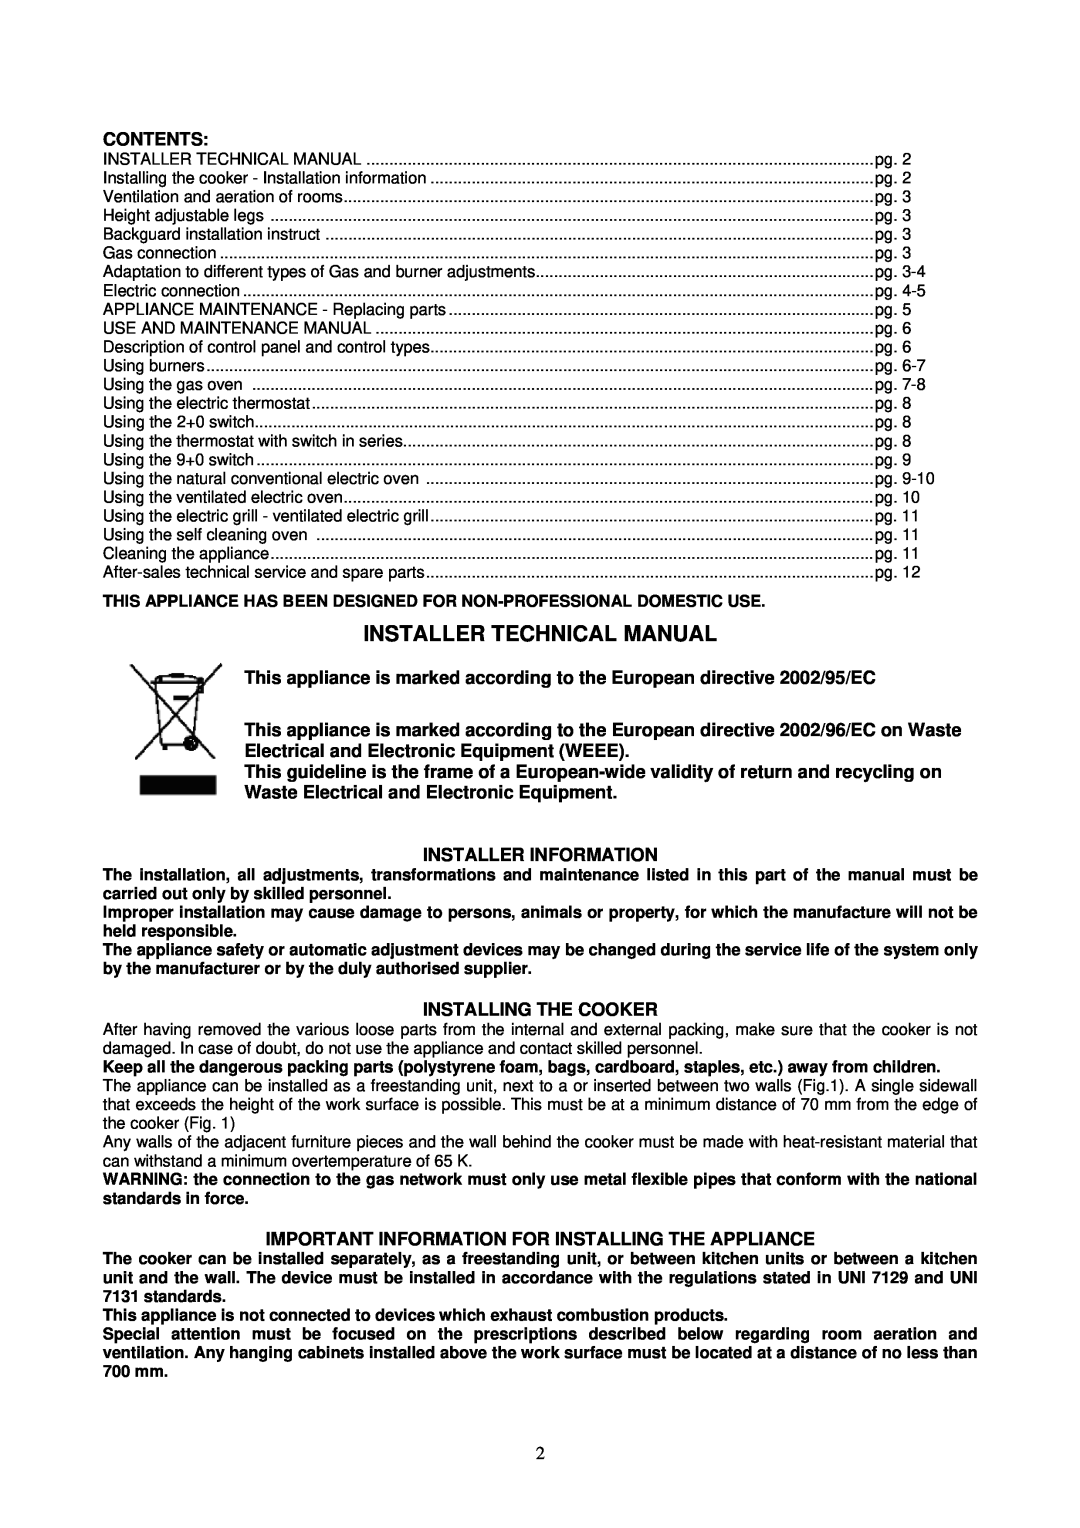 Bertazzoni M93V manual Installer Technical Manual, Contents, Installer Information, Installing The Cooker 